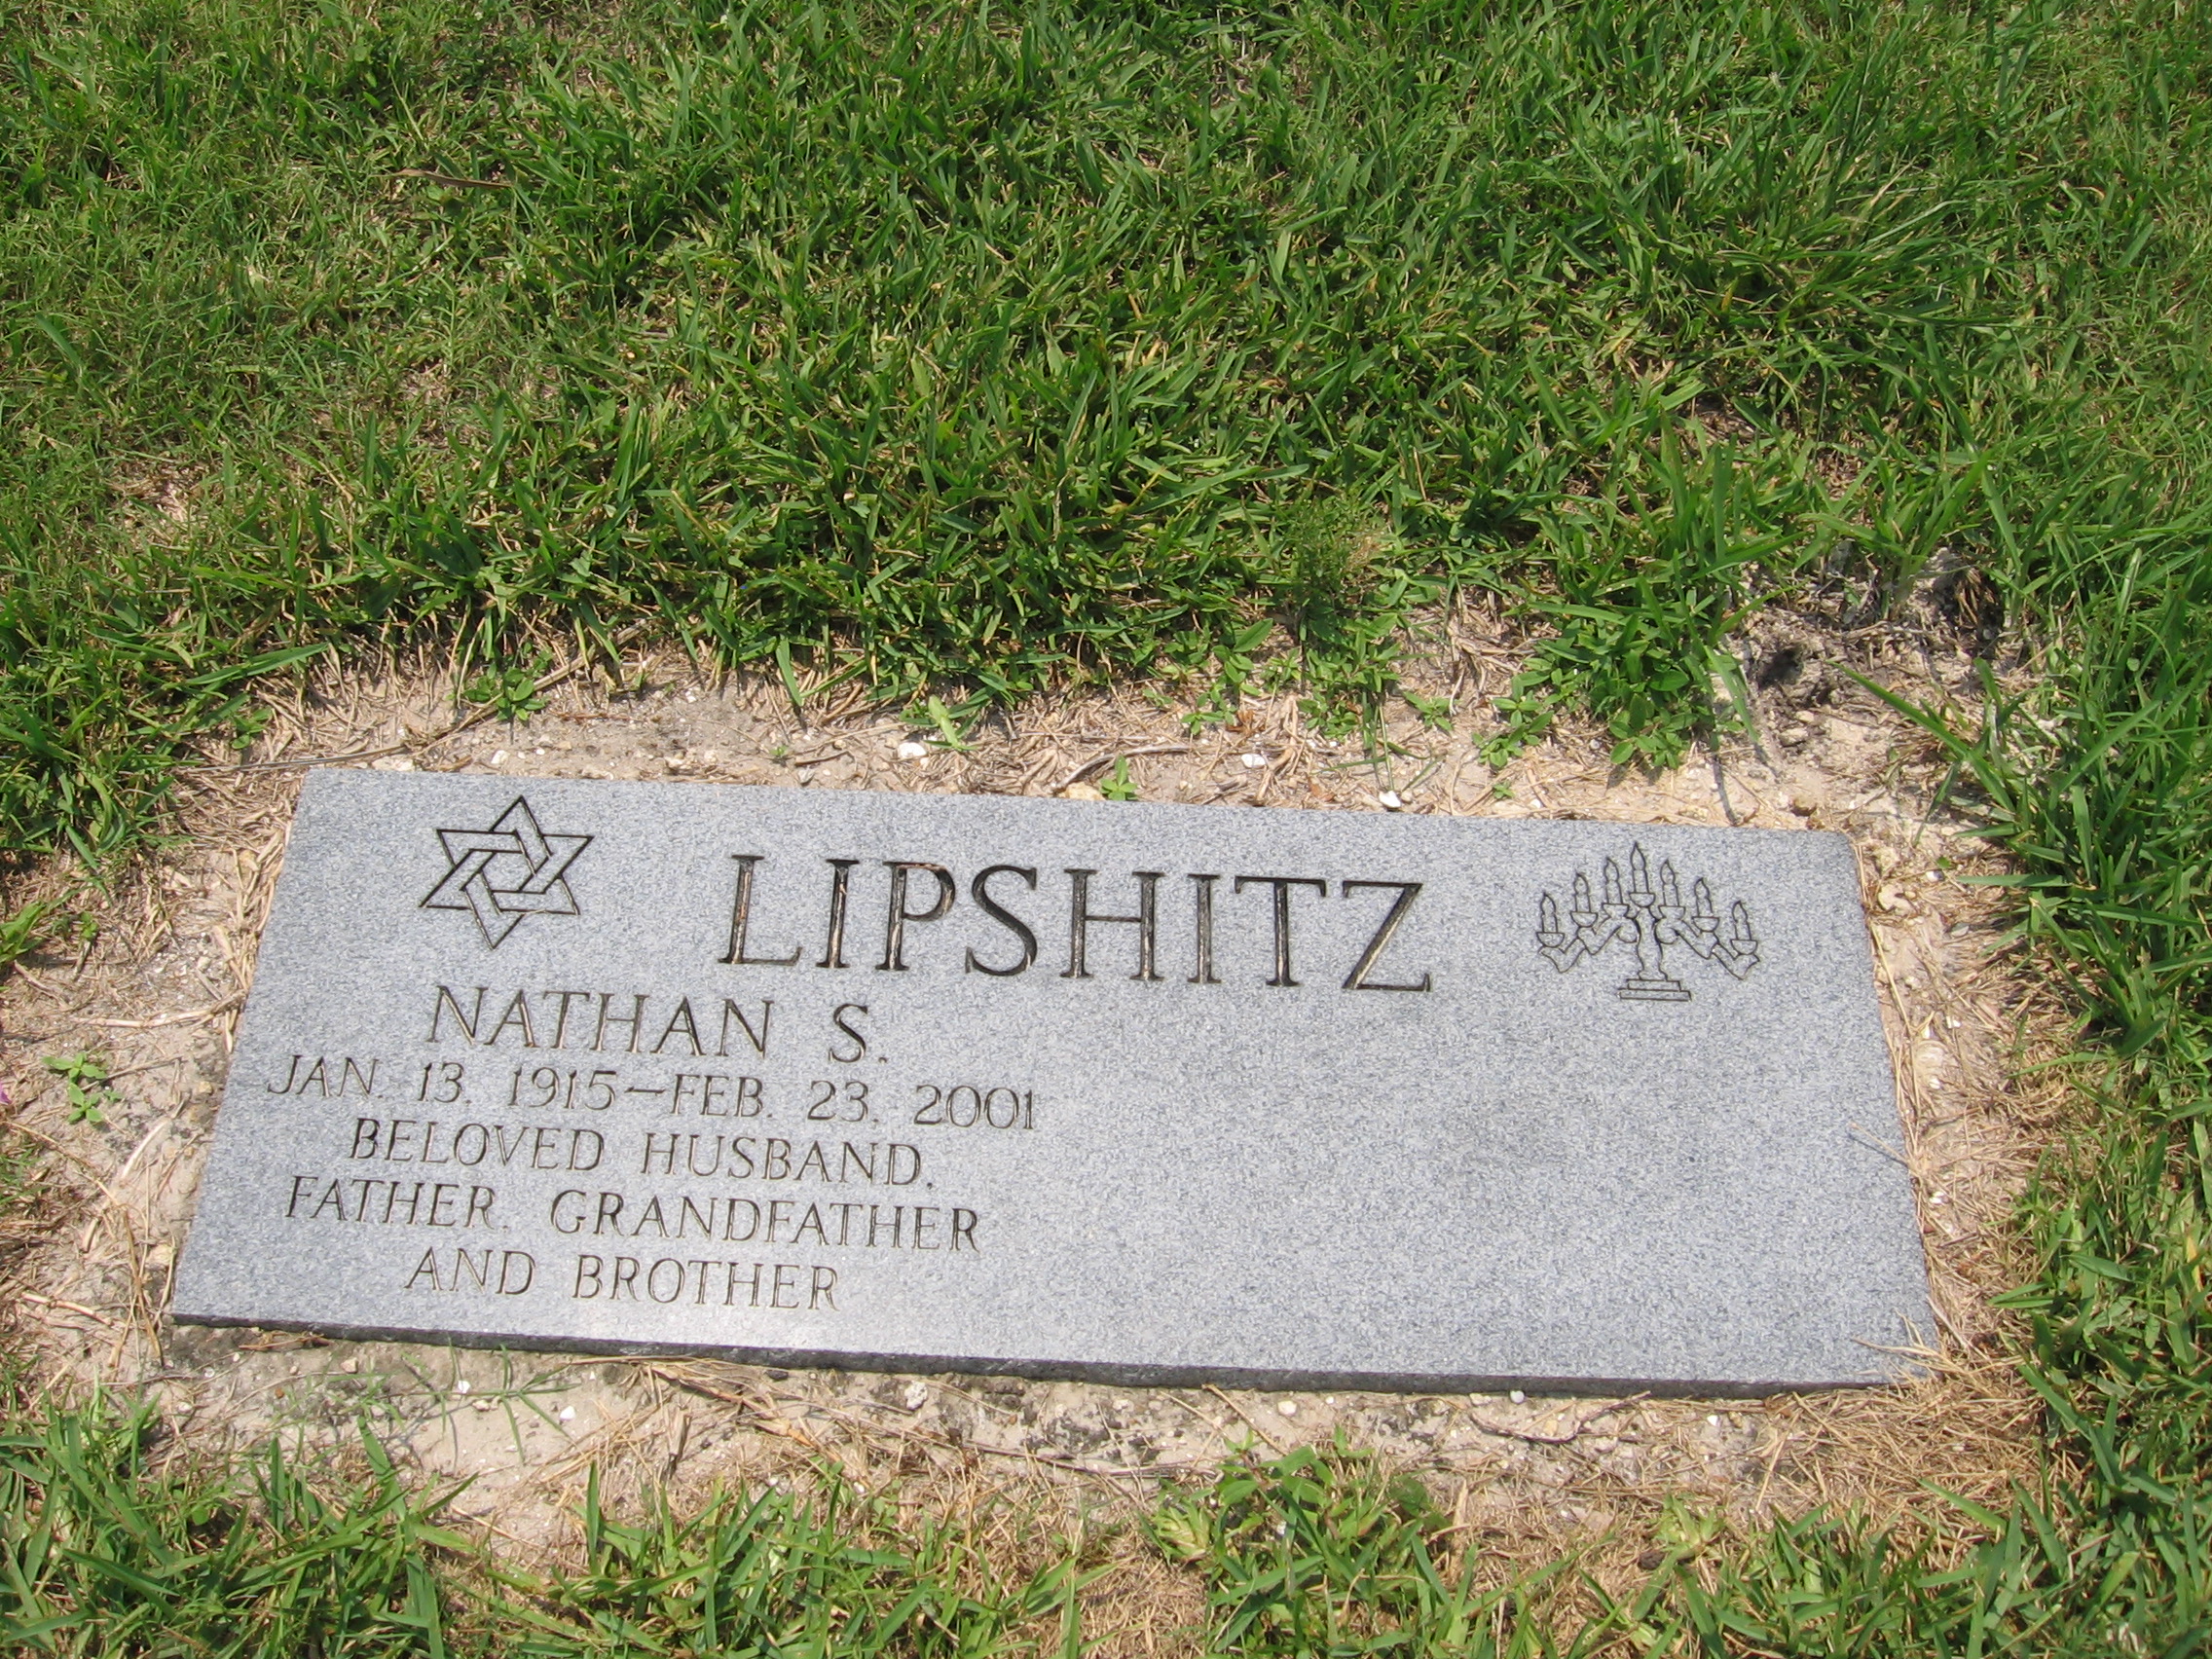 Nathan S Lipshitz